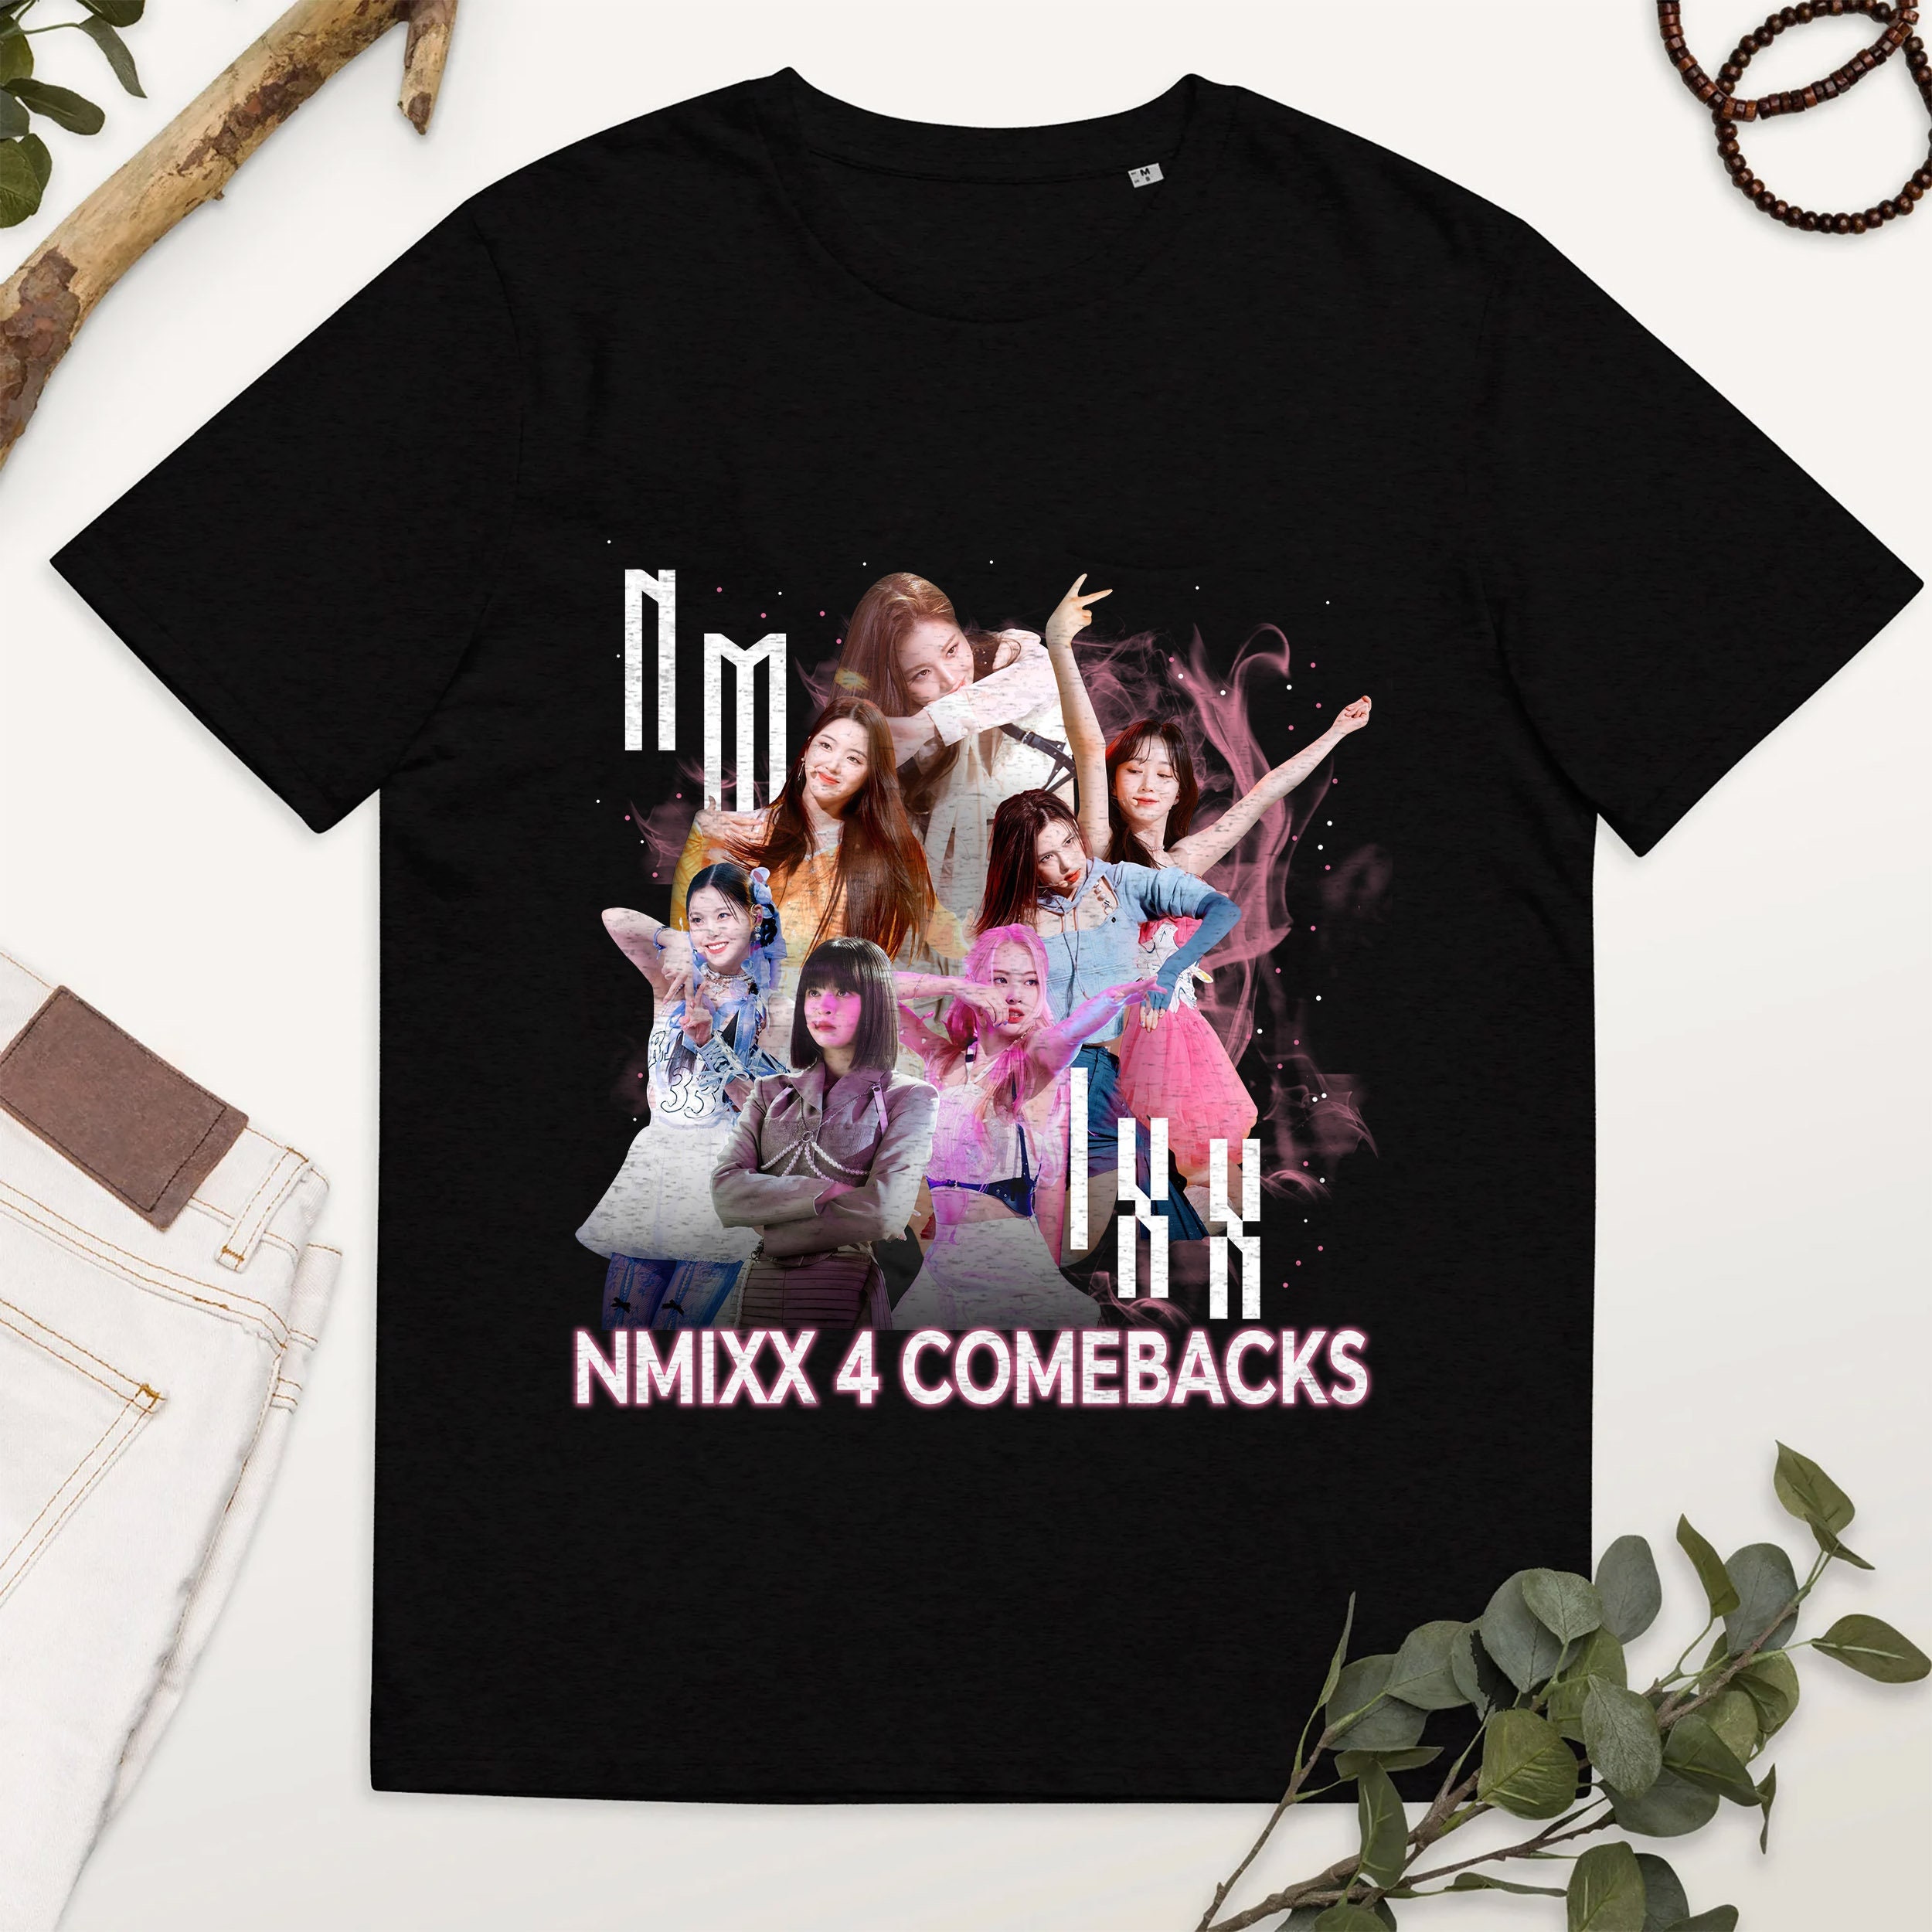 Discover Retro Nmixx Official Shirt, NMIXX Vintage Shirt, NMIXX Girl Group Shirt